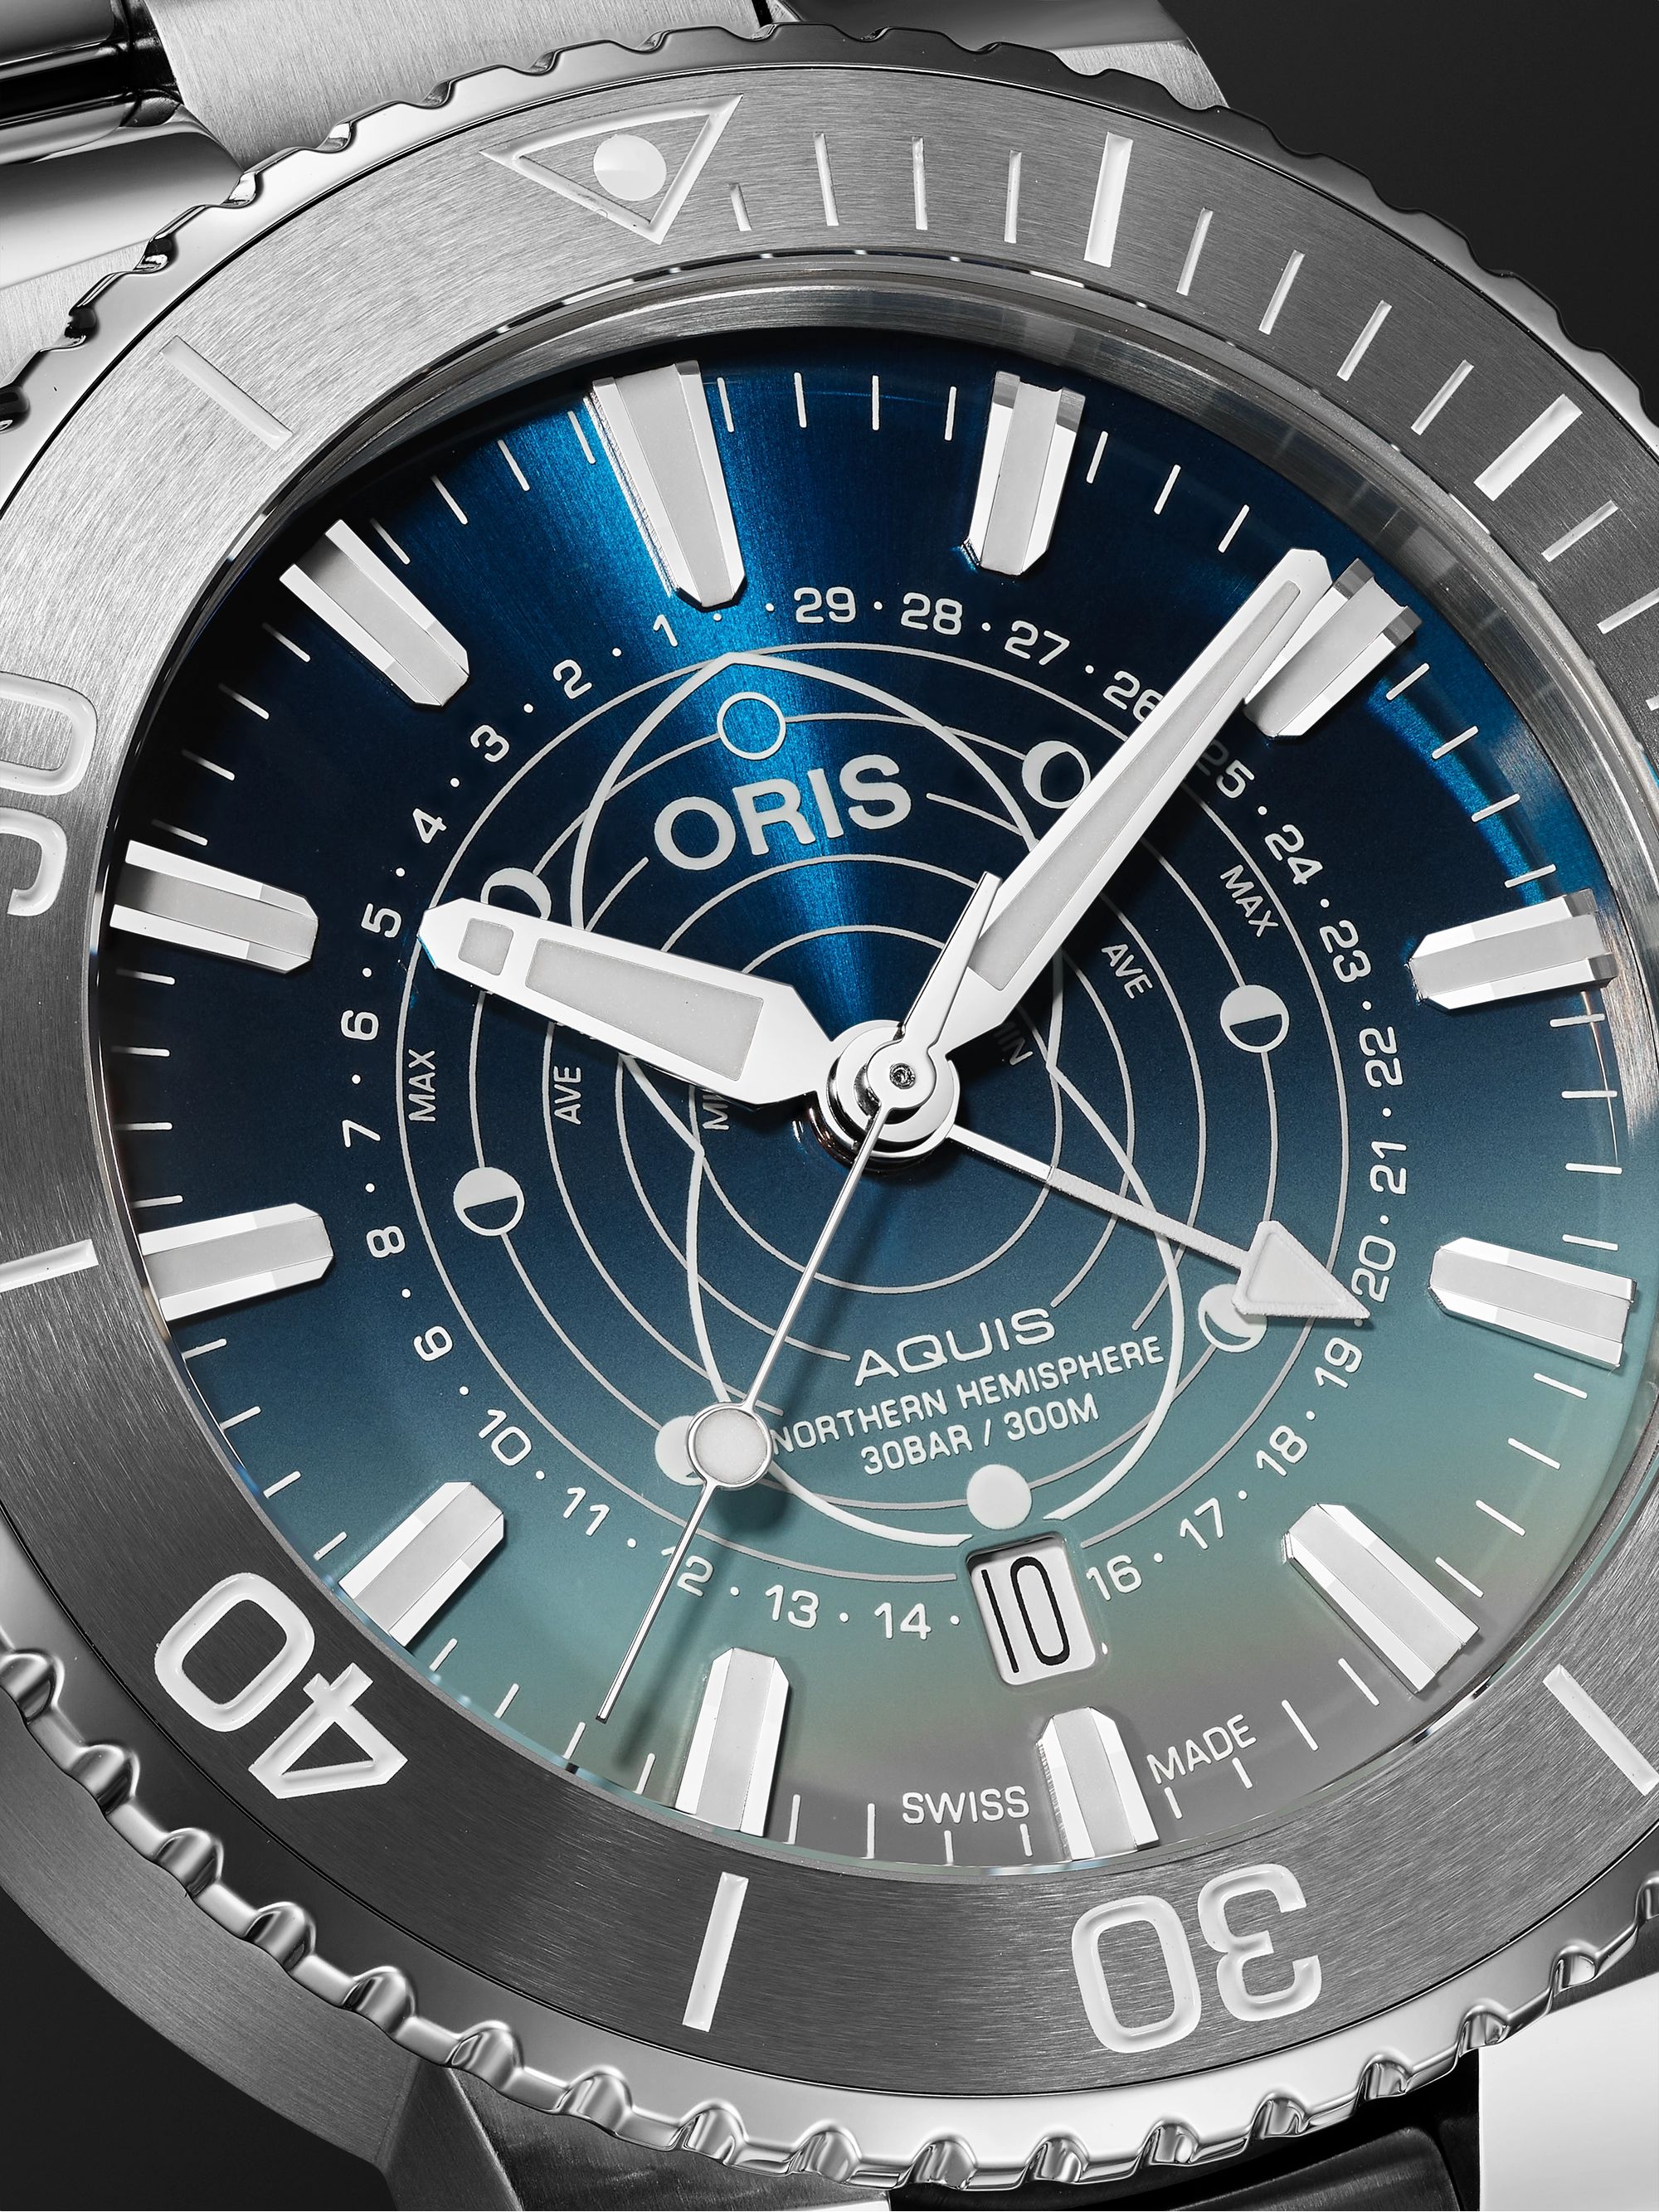 ORIS Aquis Dat Watt Limited Edition Automatic 43.5mm Stainless Steel Watch, Ref. No. 01 761 7765 4185